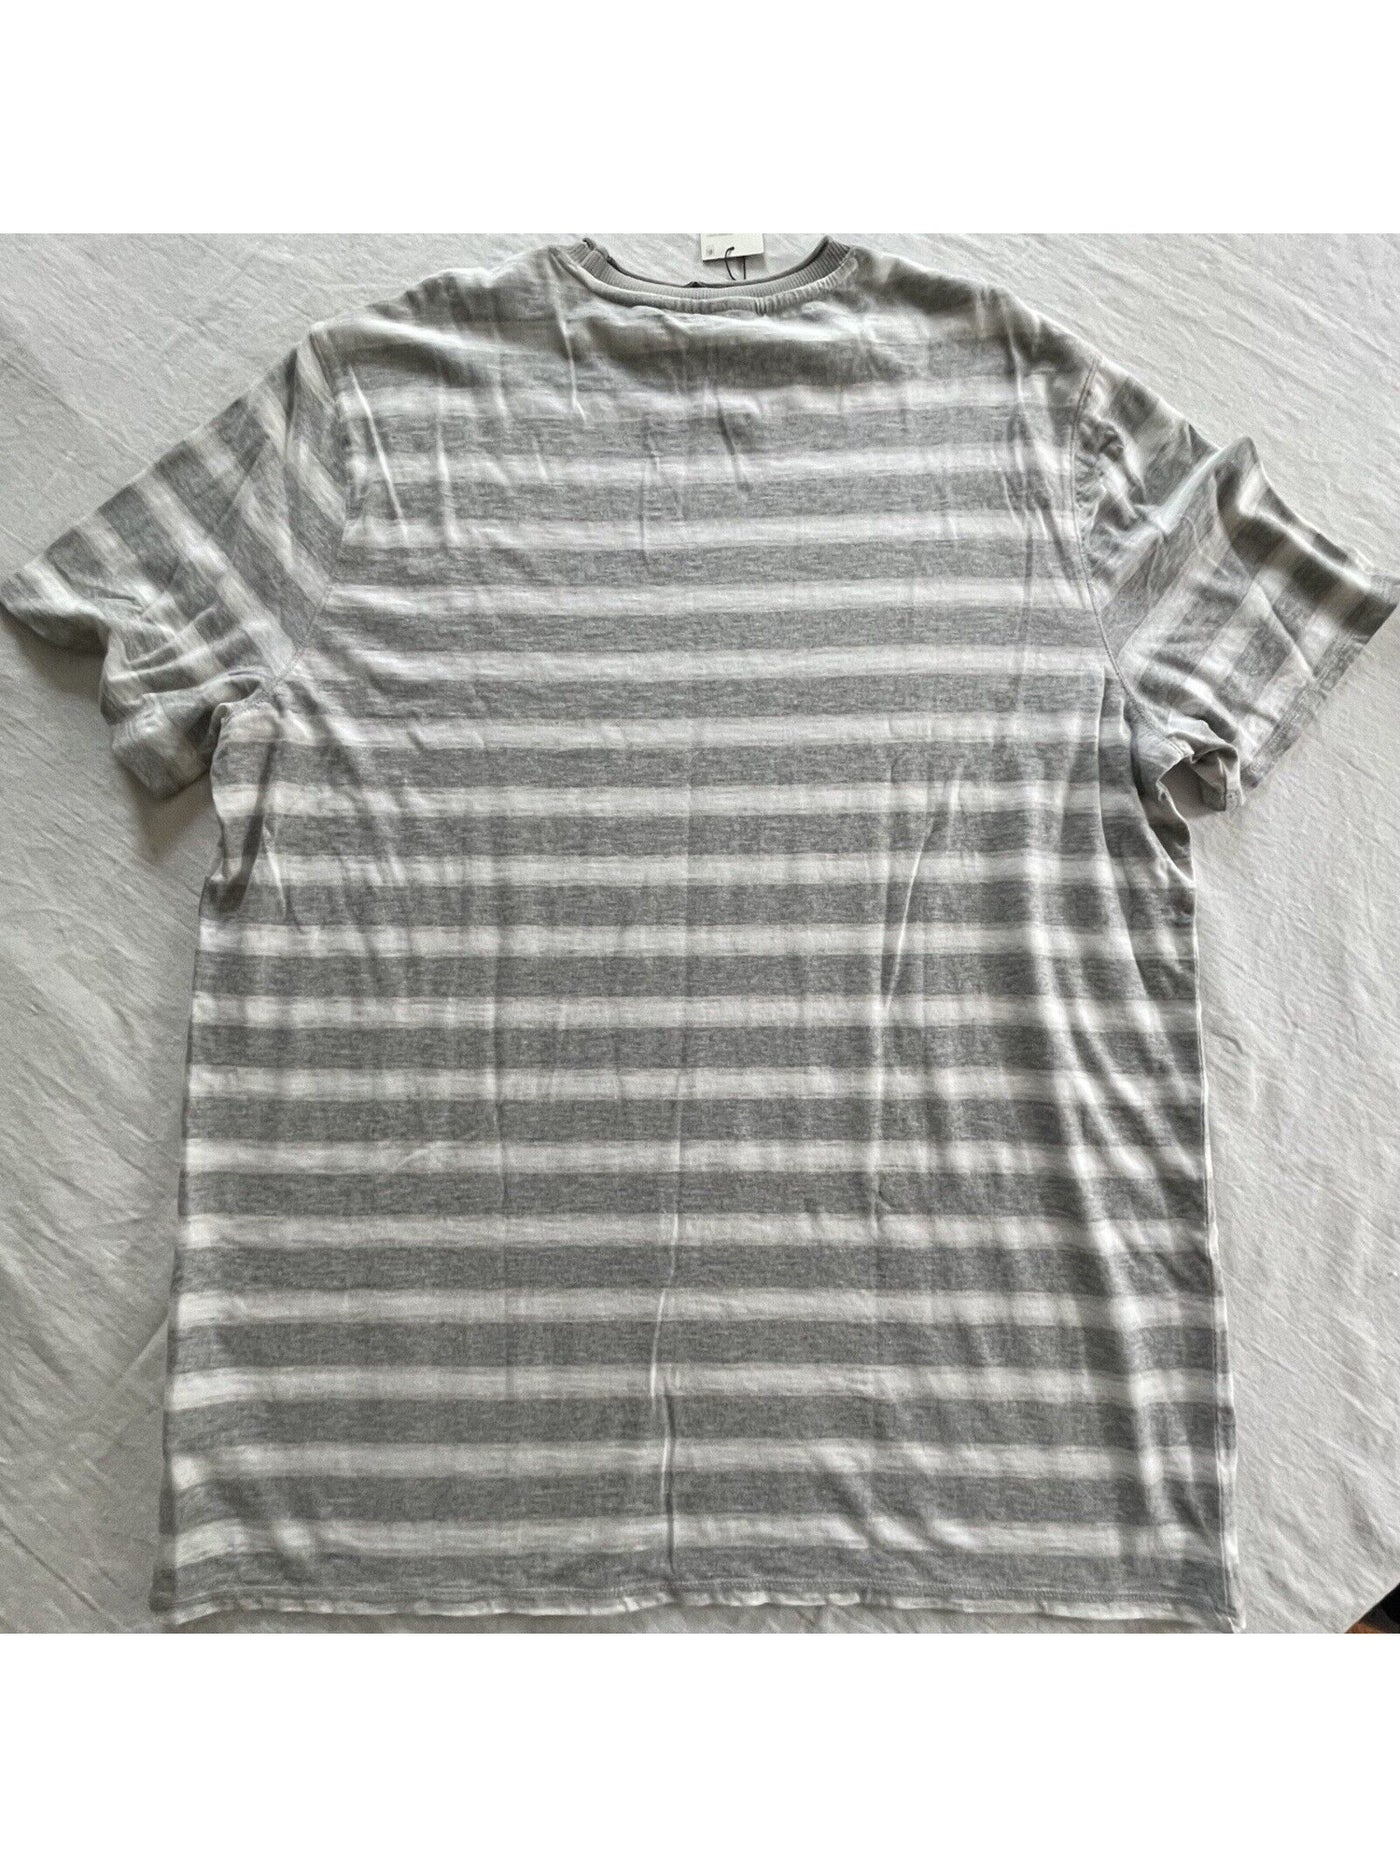 MICHAEL KORS Mens Gray Striped T-Shirt XL